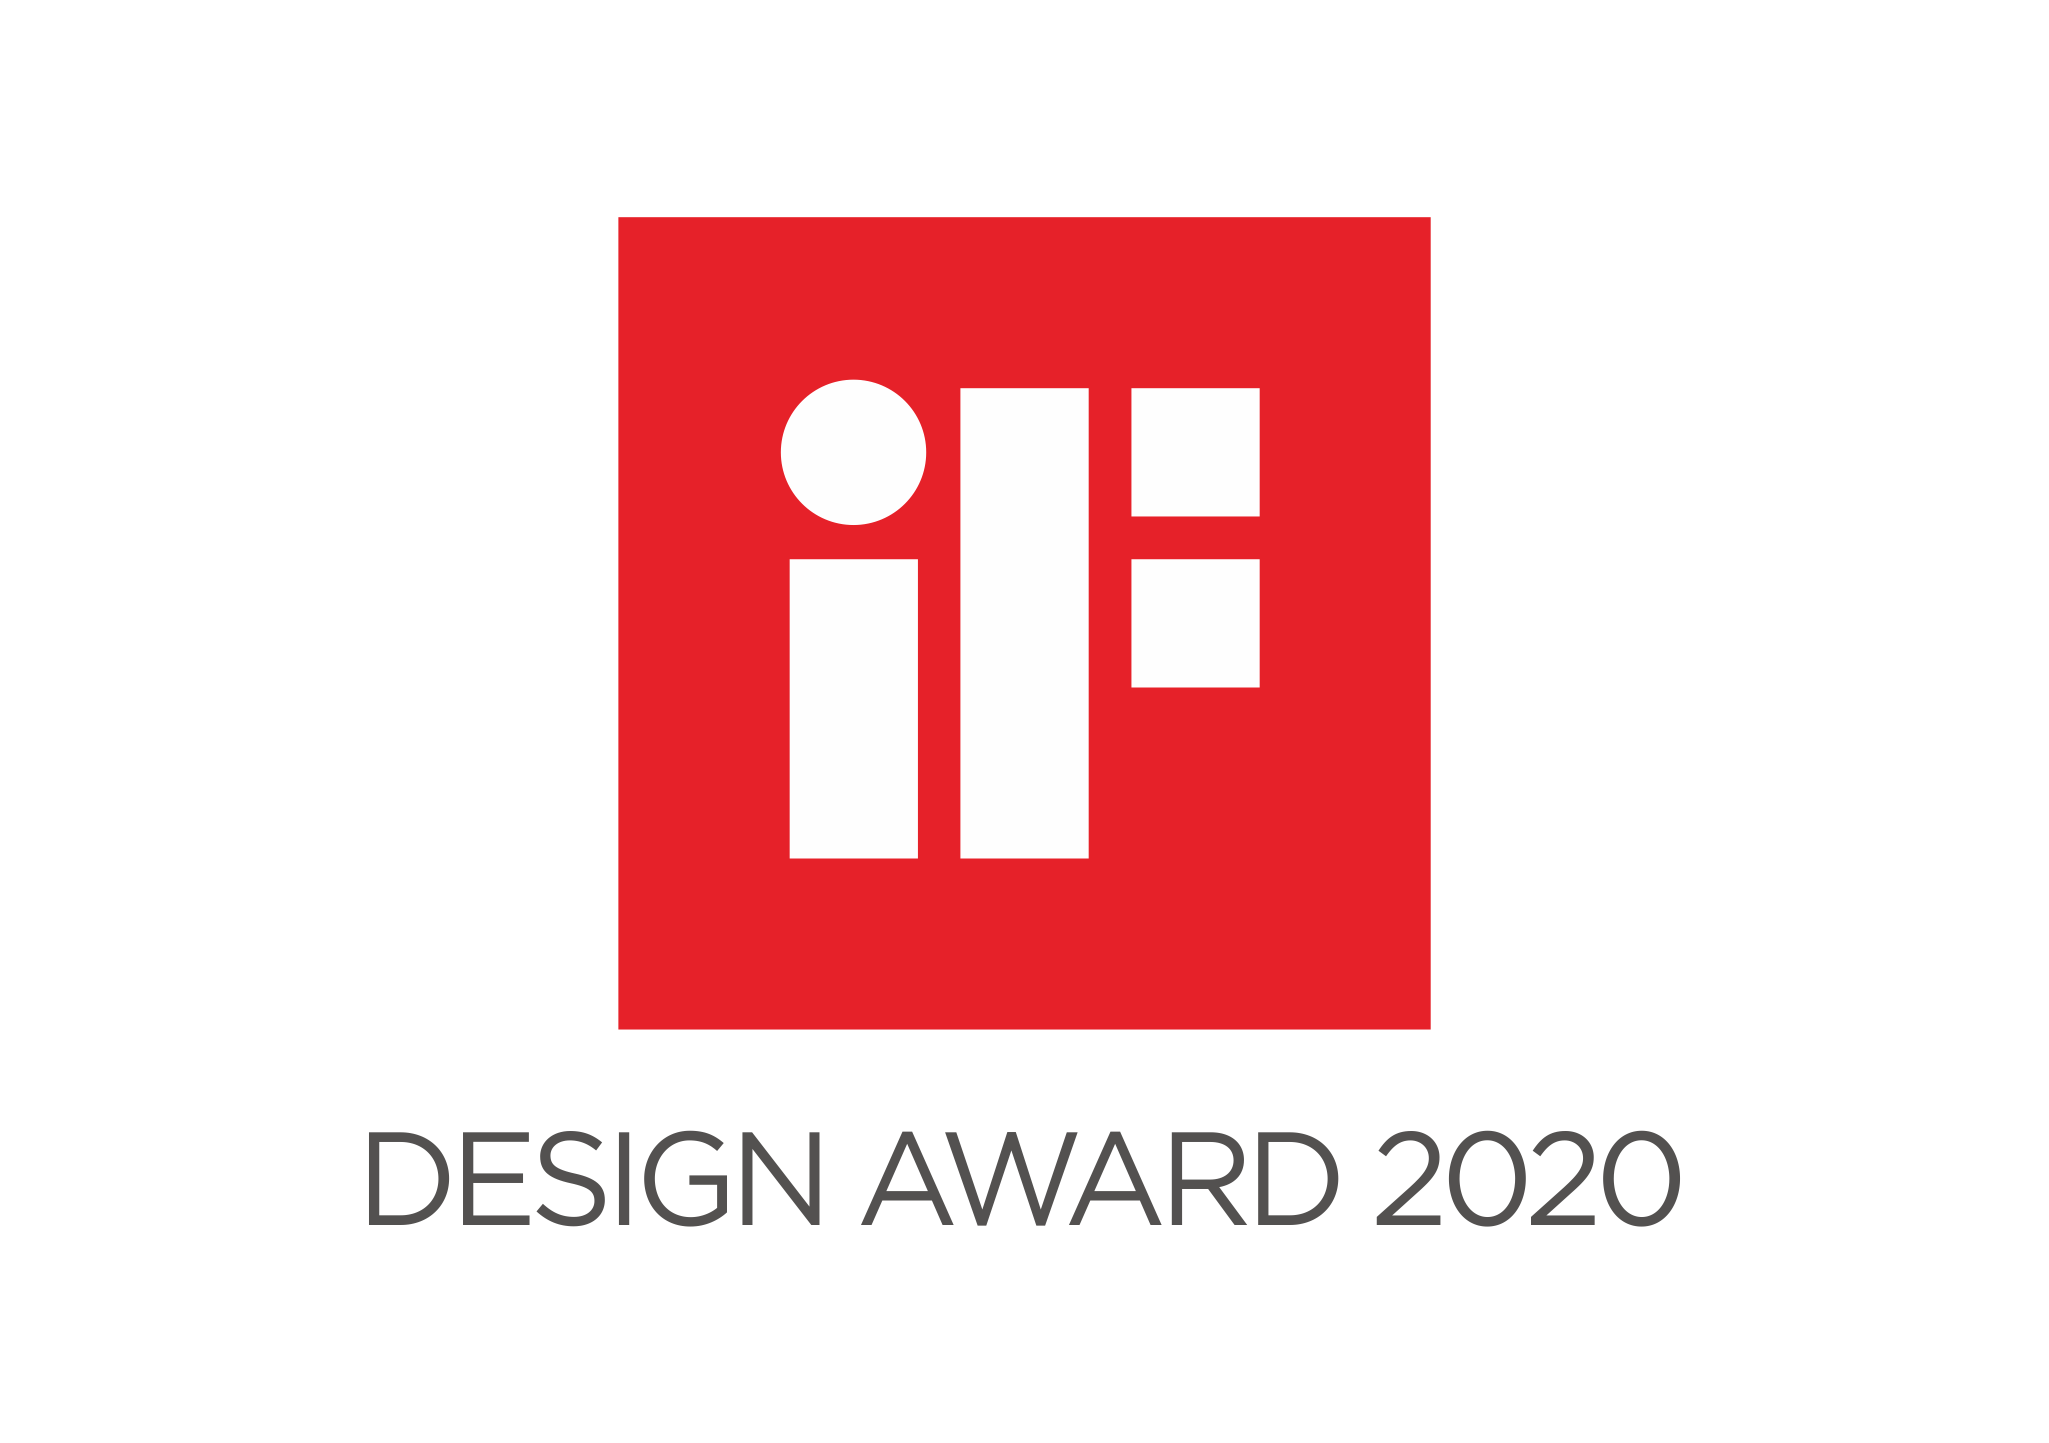 If Design Award 2020